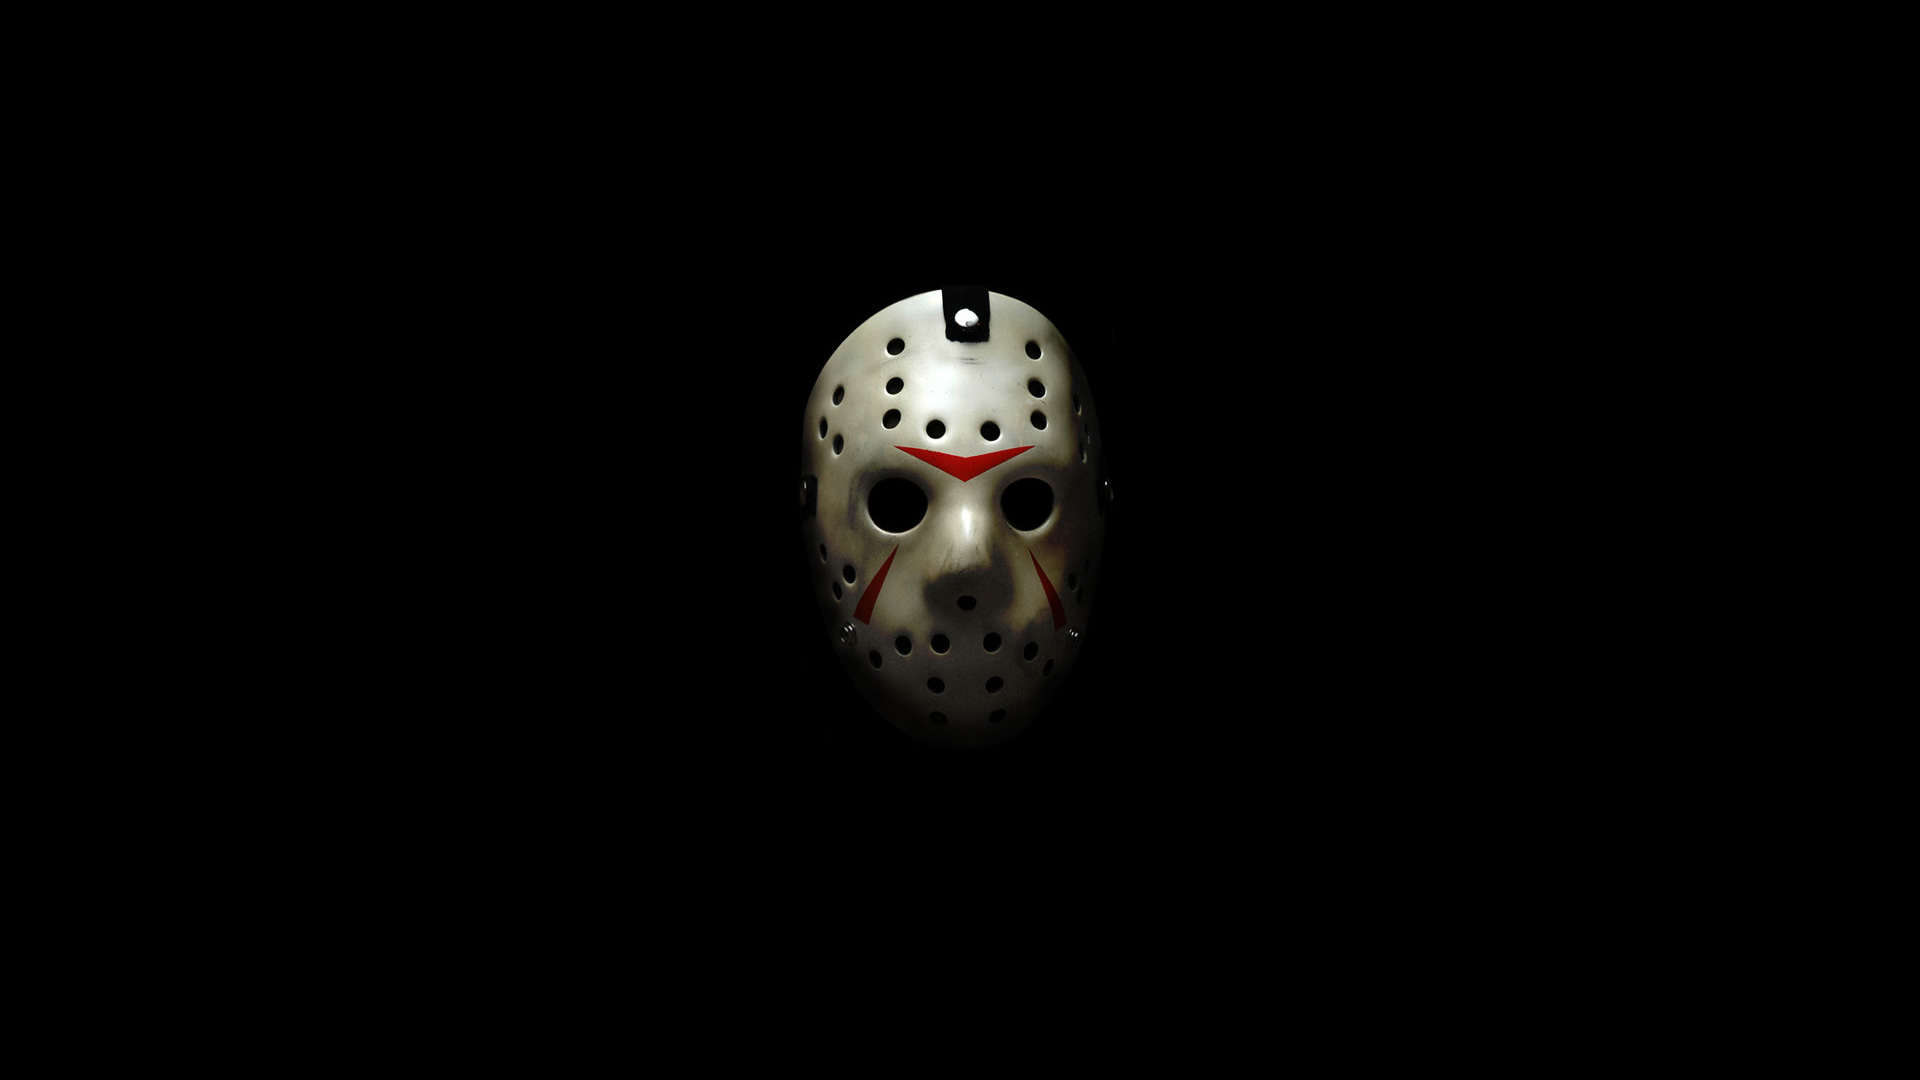 Friday The 13th Mask HD Wallpaper FullHDwpp Full